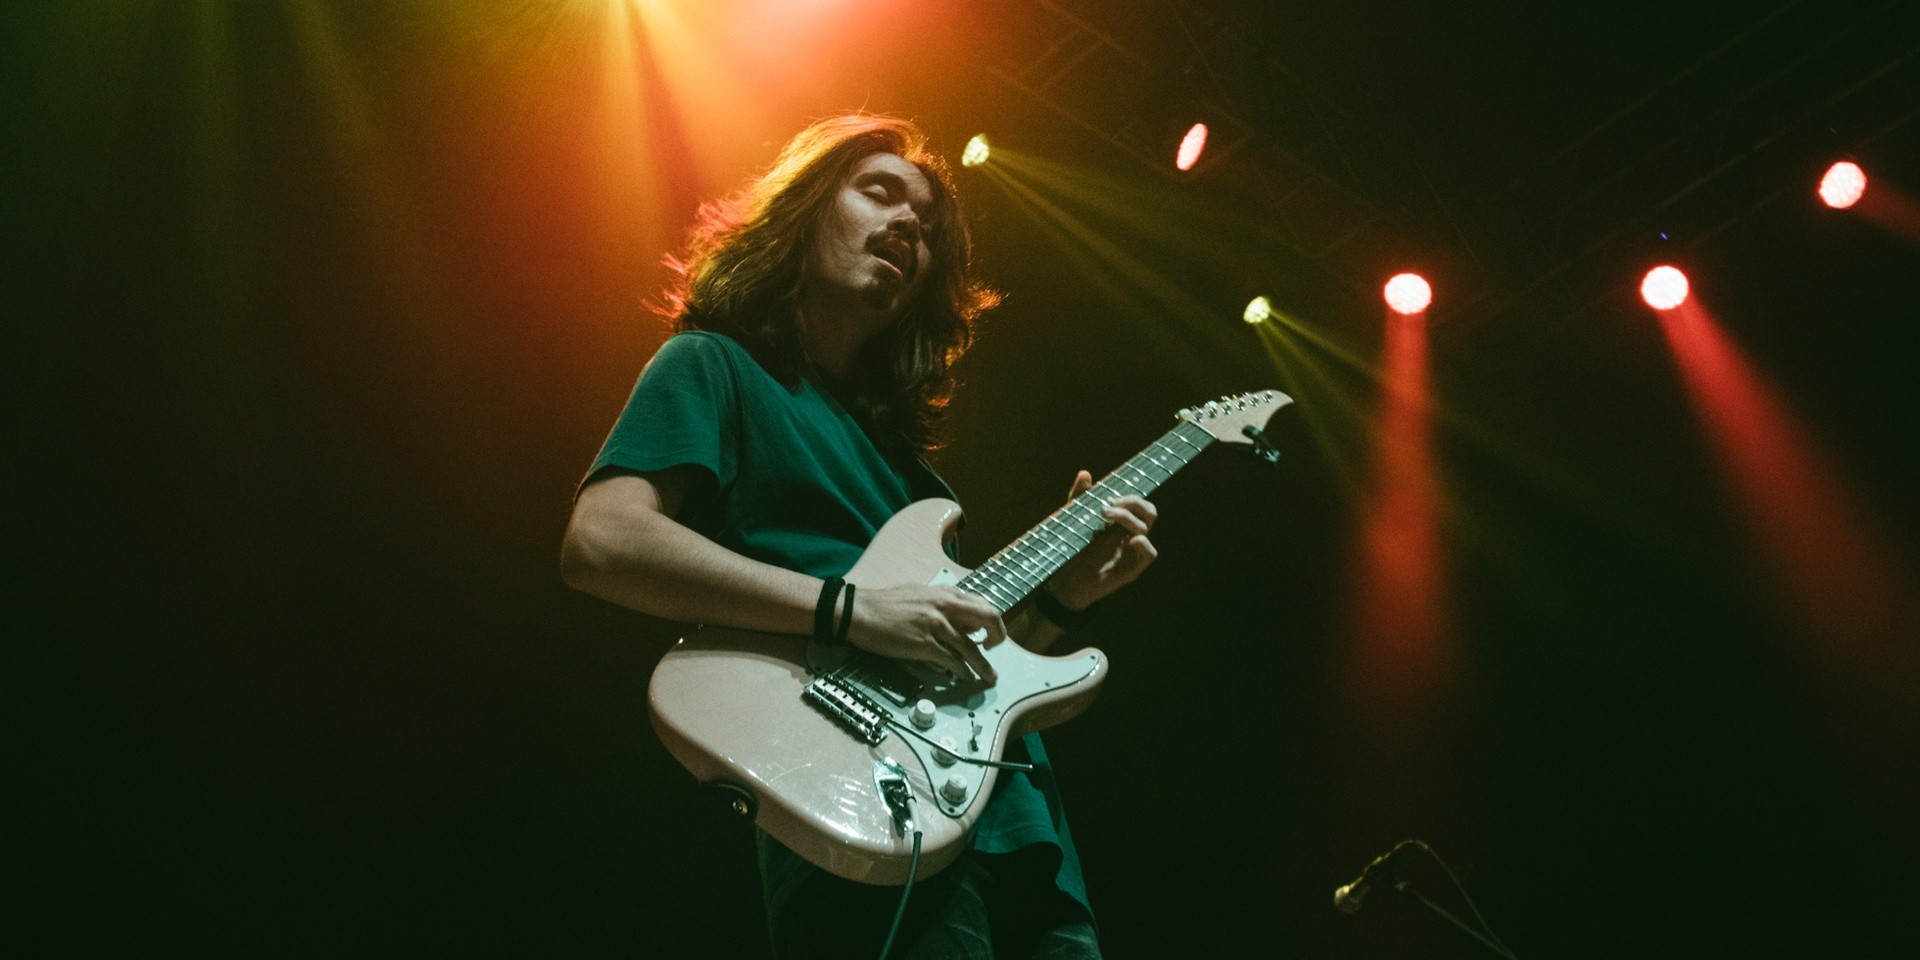 Mateus Asato proves "guitar is still alive" at Manila concert – photo gallery